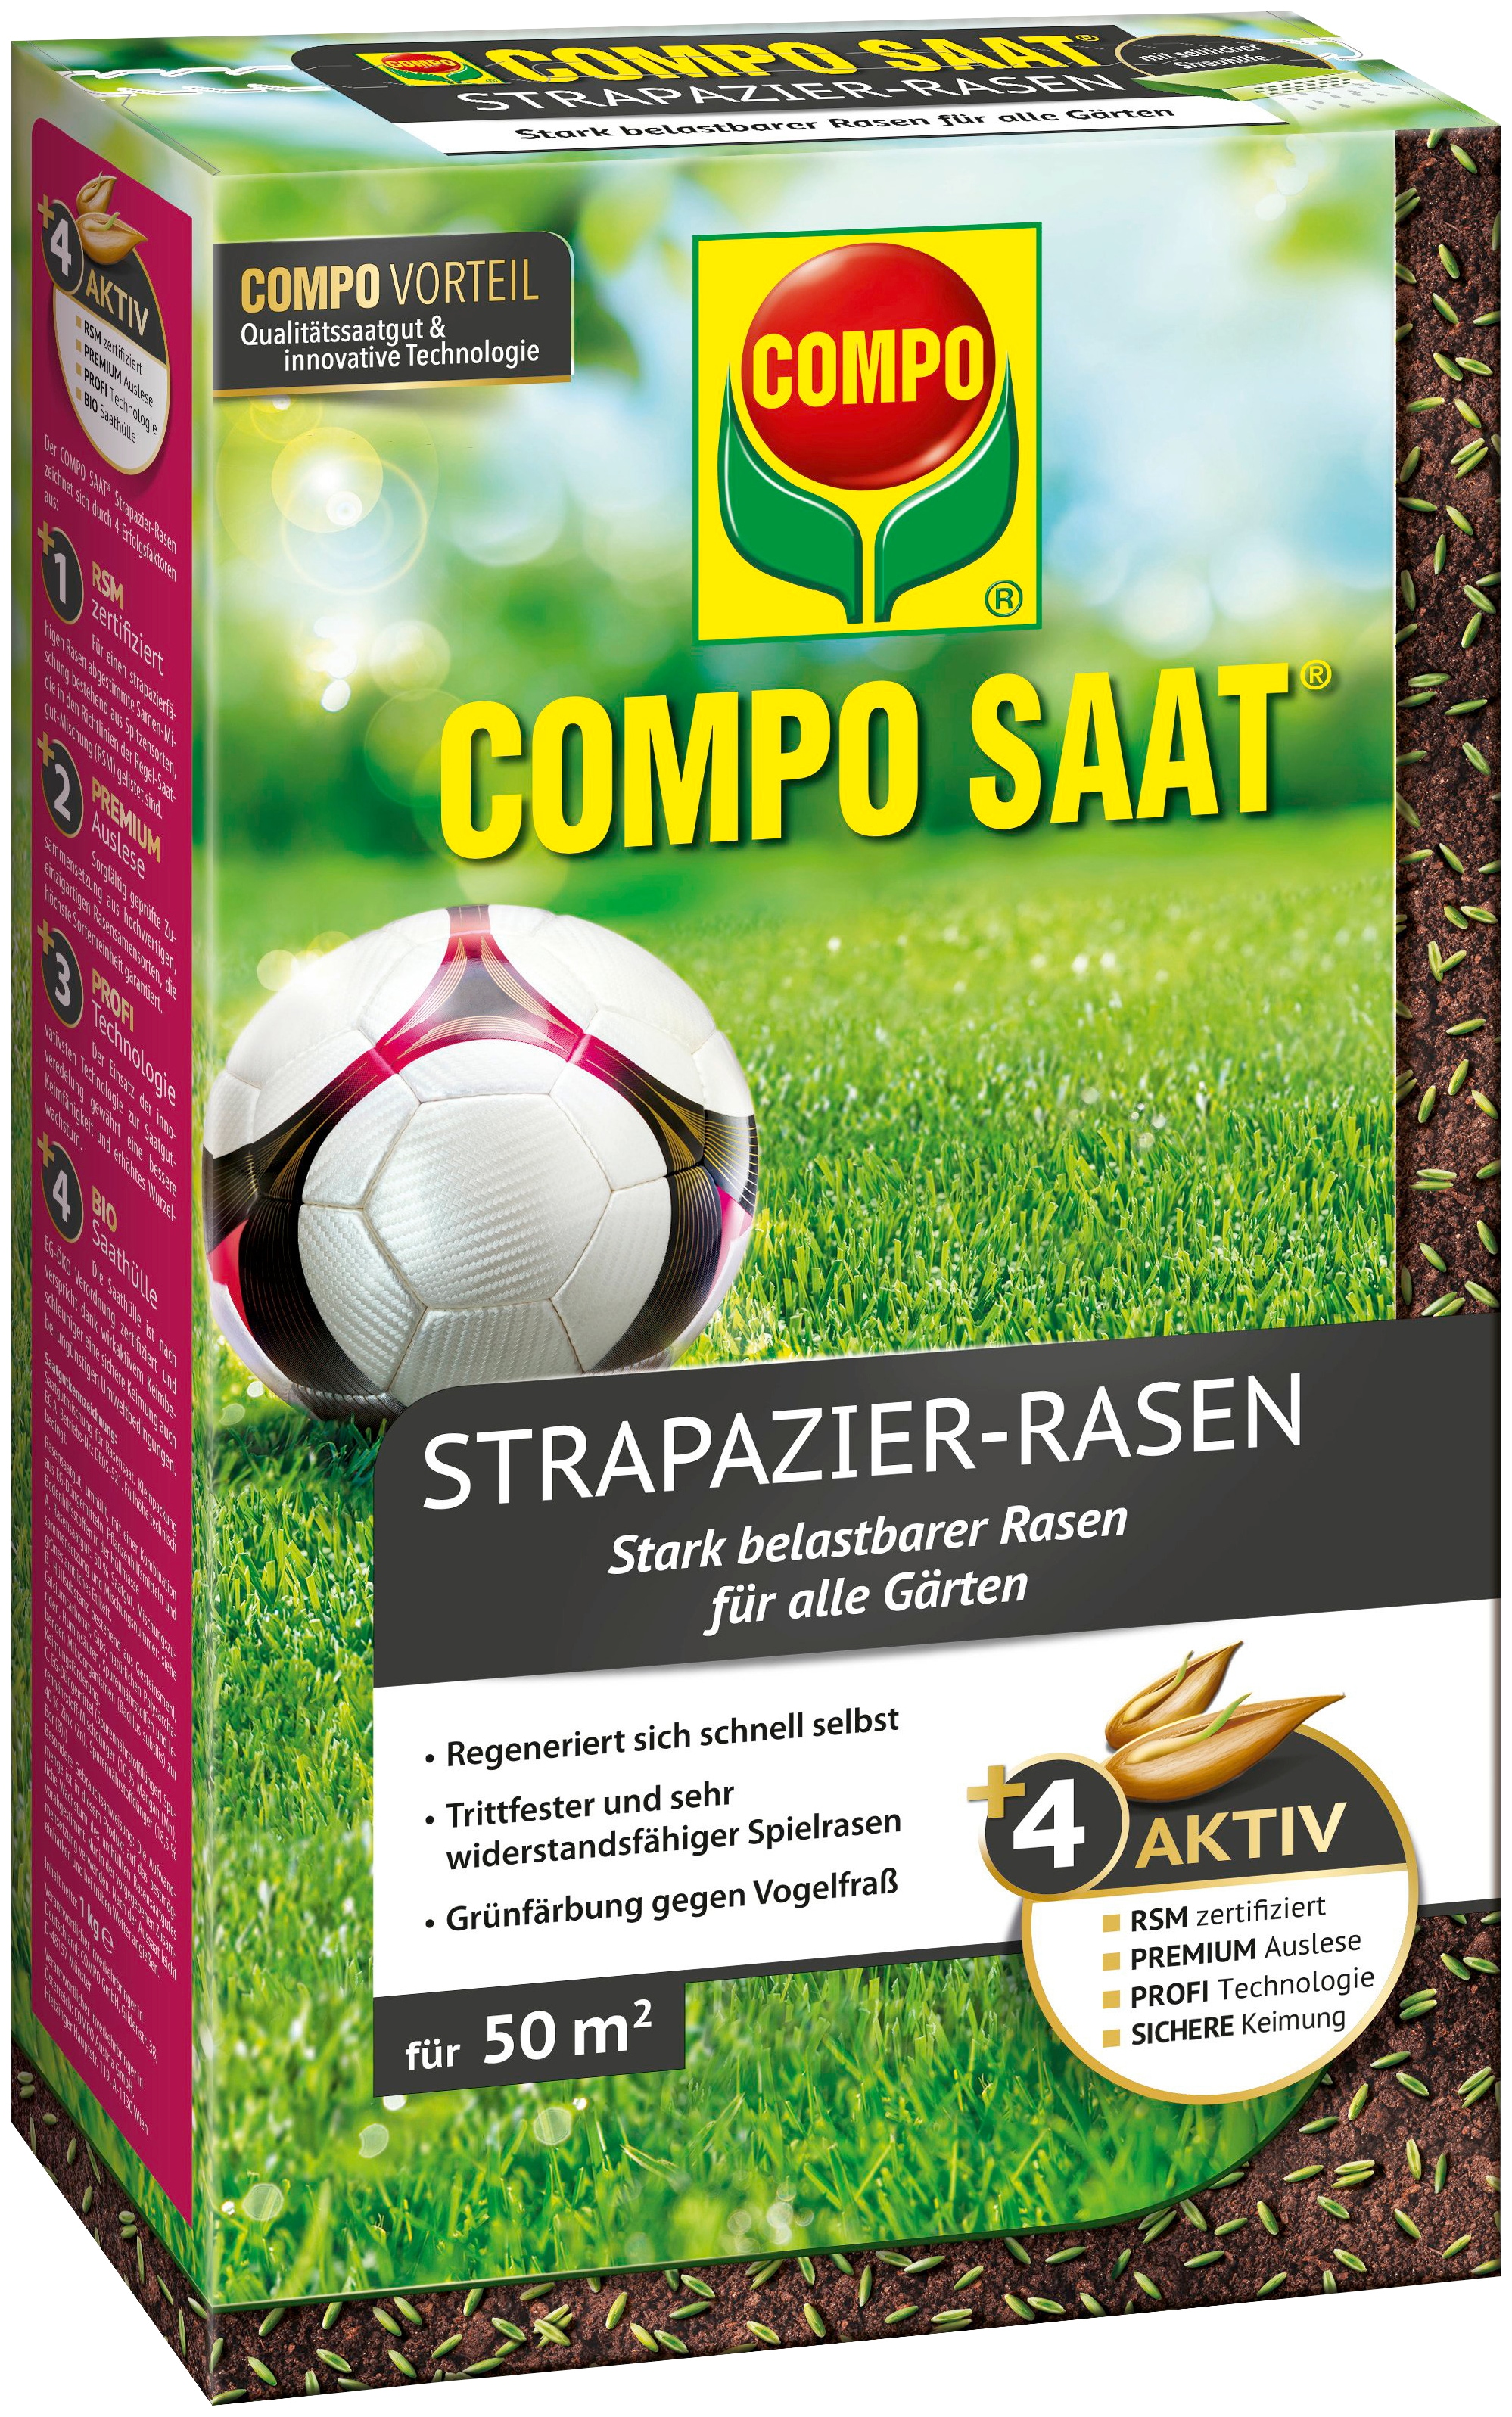 Compo Rasensamen »COMPO SAAT®«, Strapazier-Rasen, 1 kg, für 50 m²